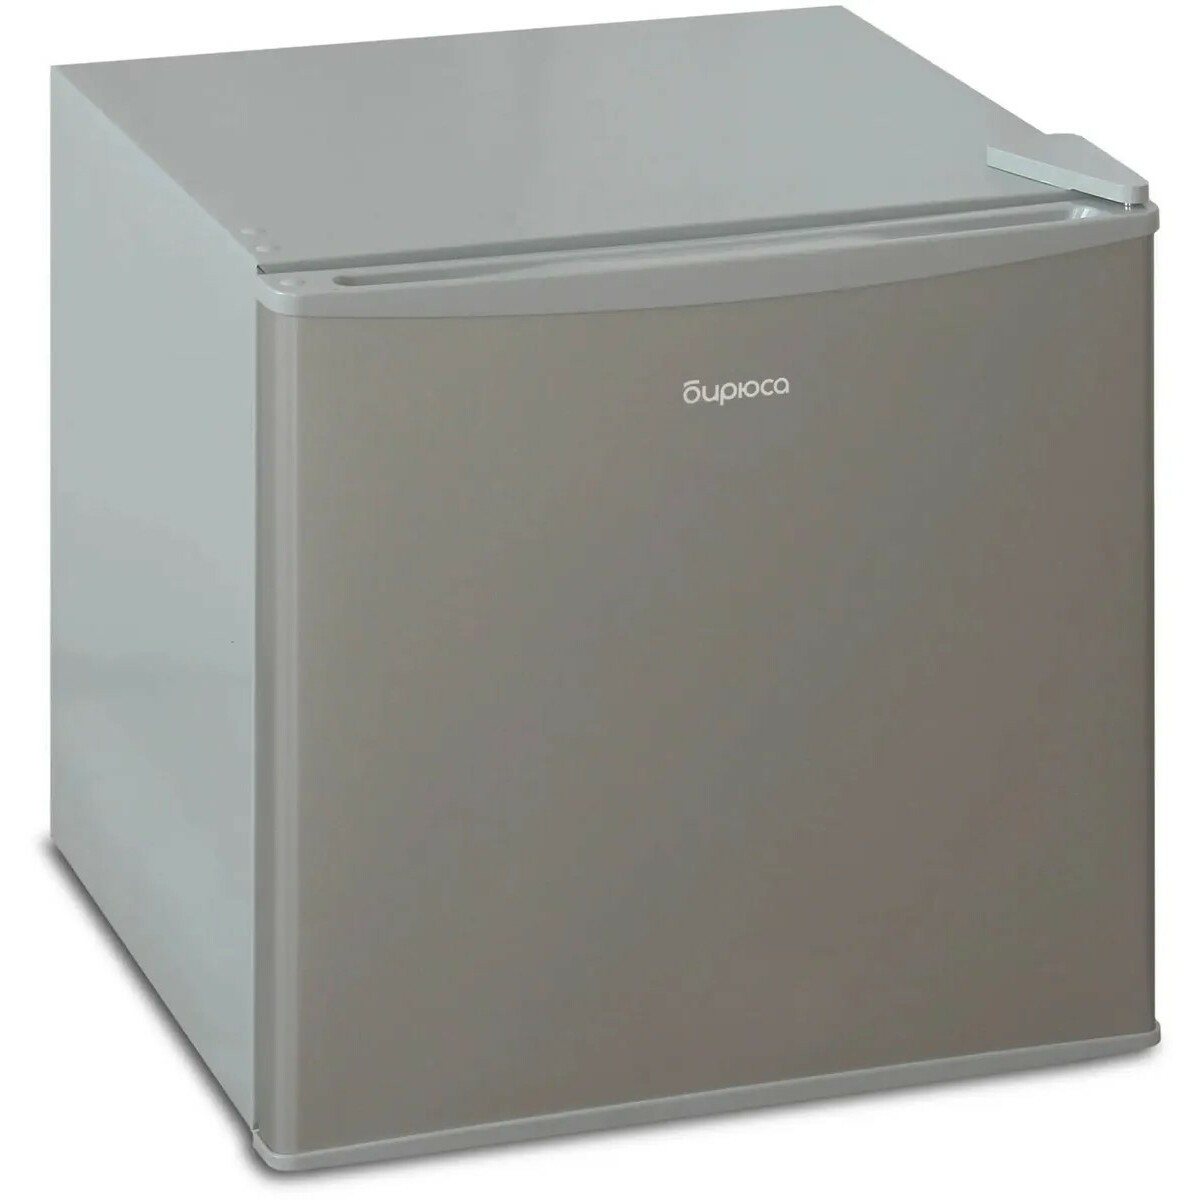 Холодильник Бирюса Б-M50 (Цвет: Inox)